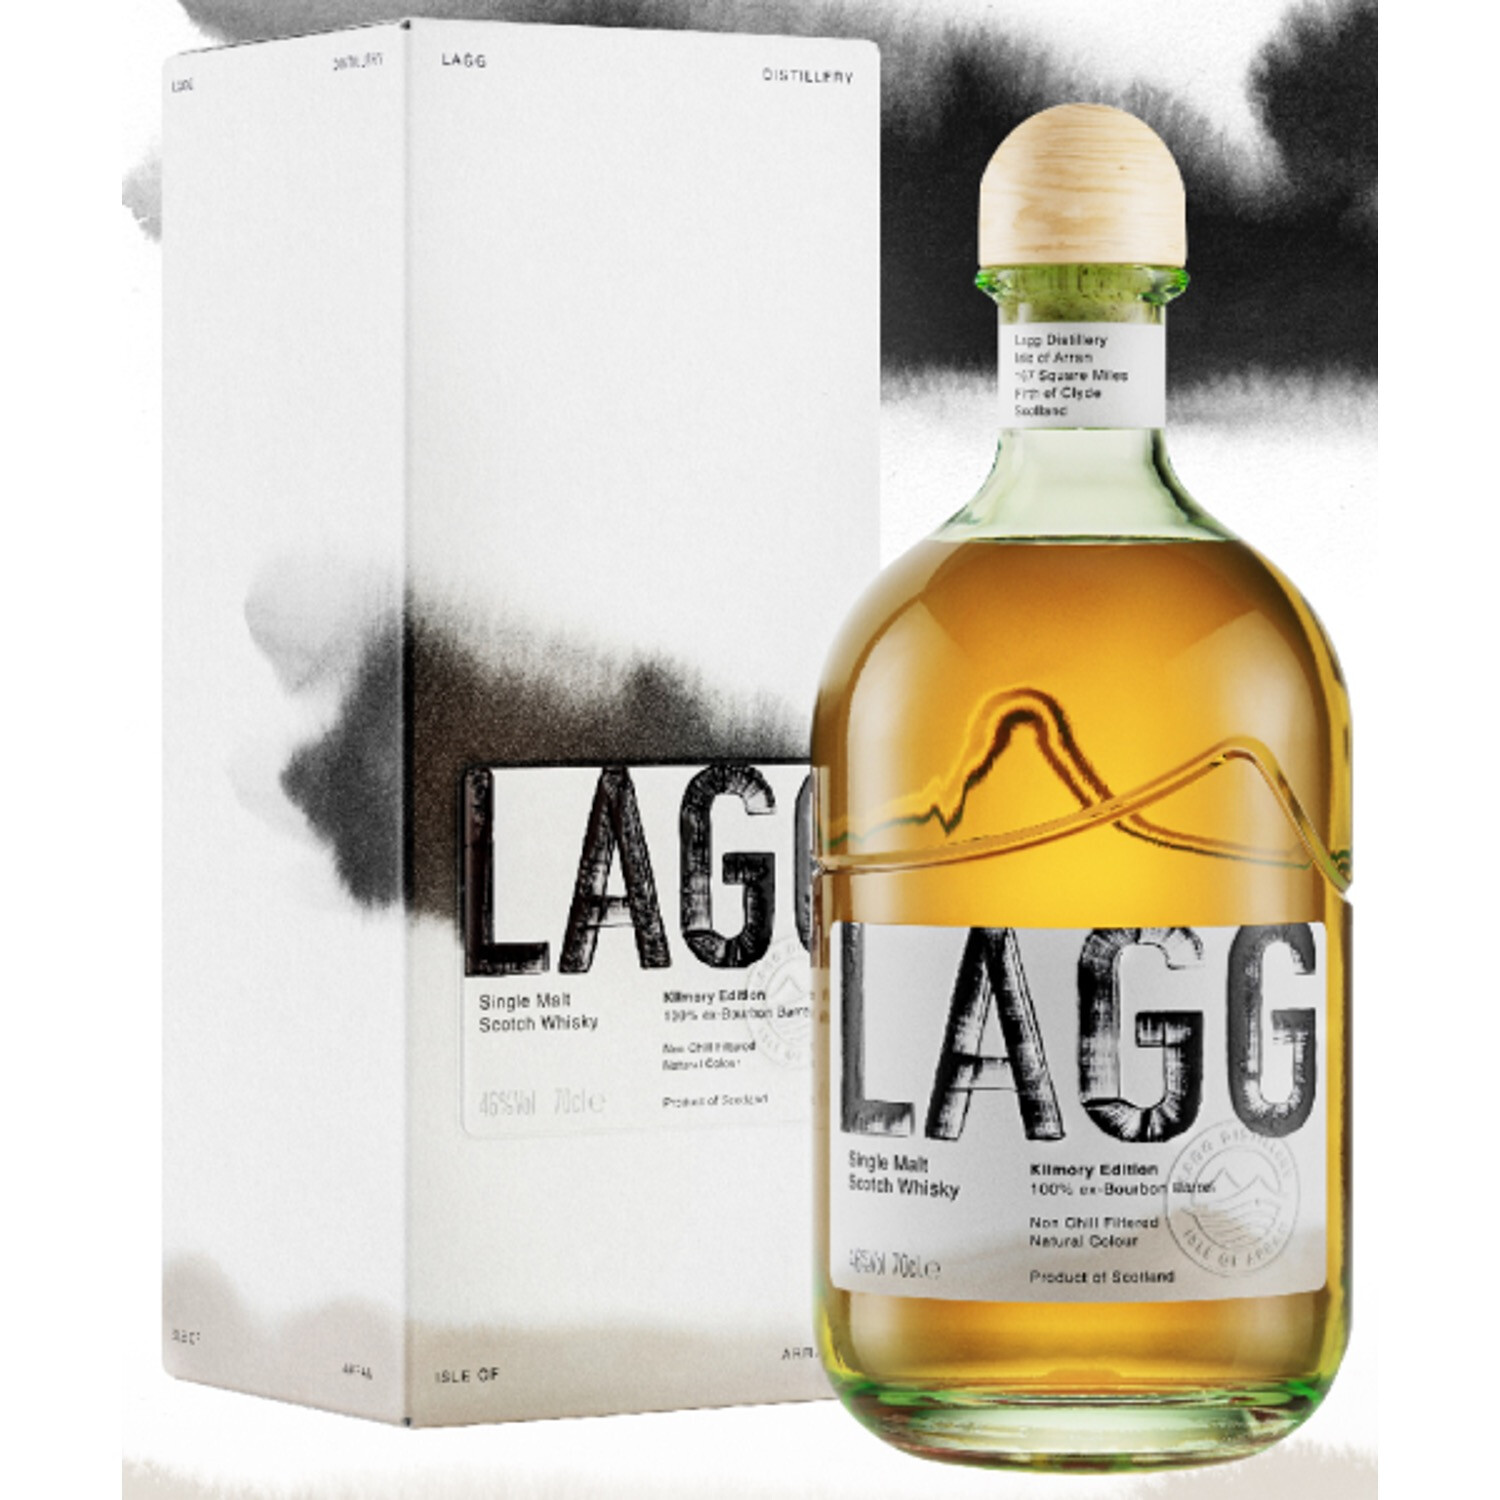 Lagg - Kilmory Edition